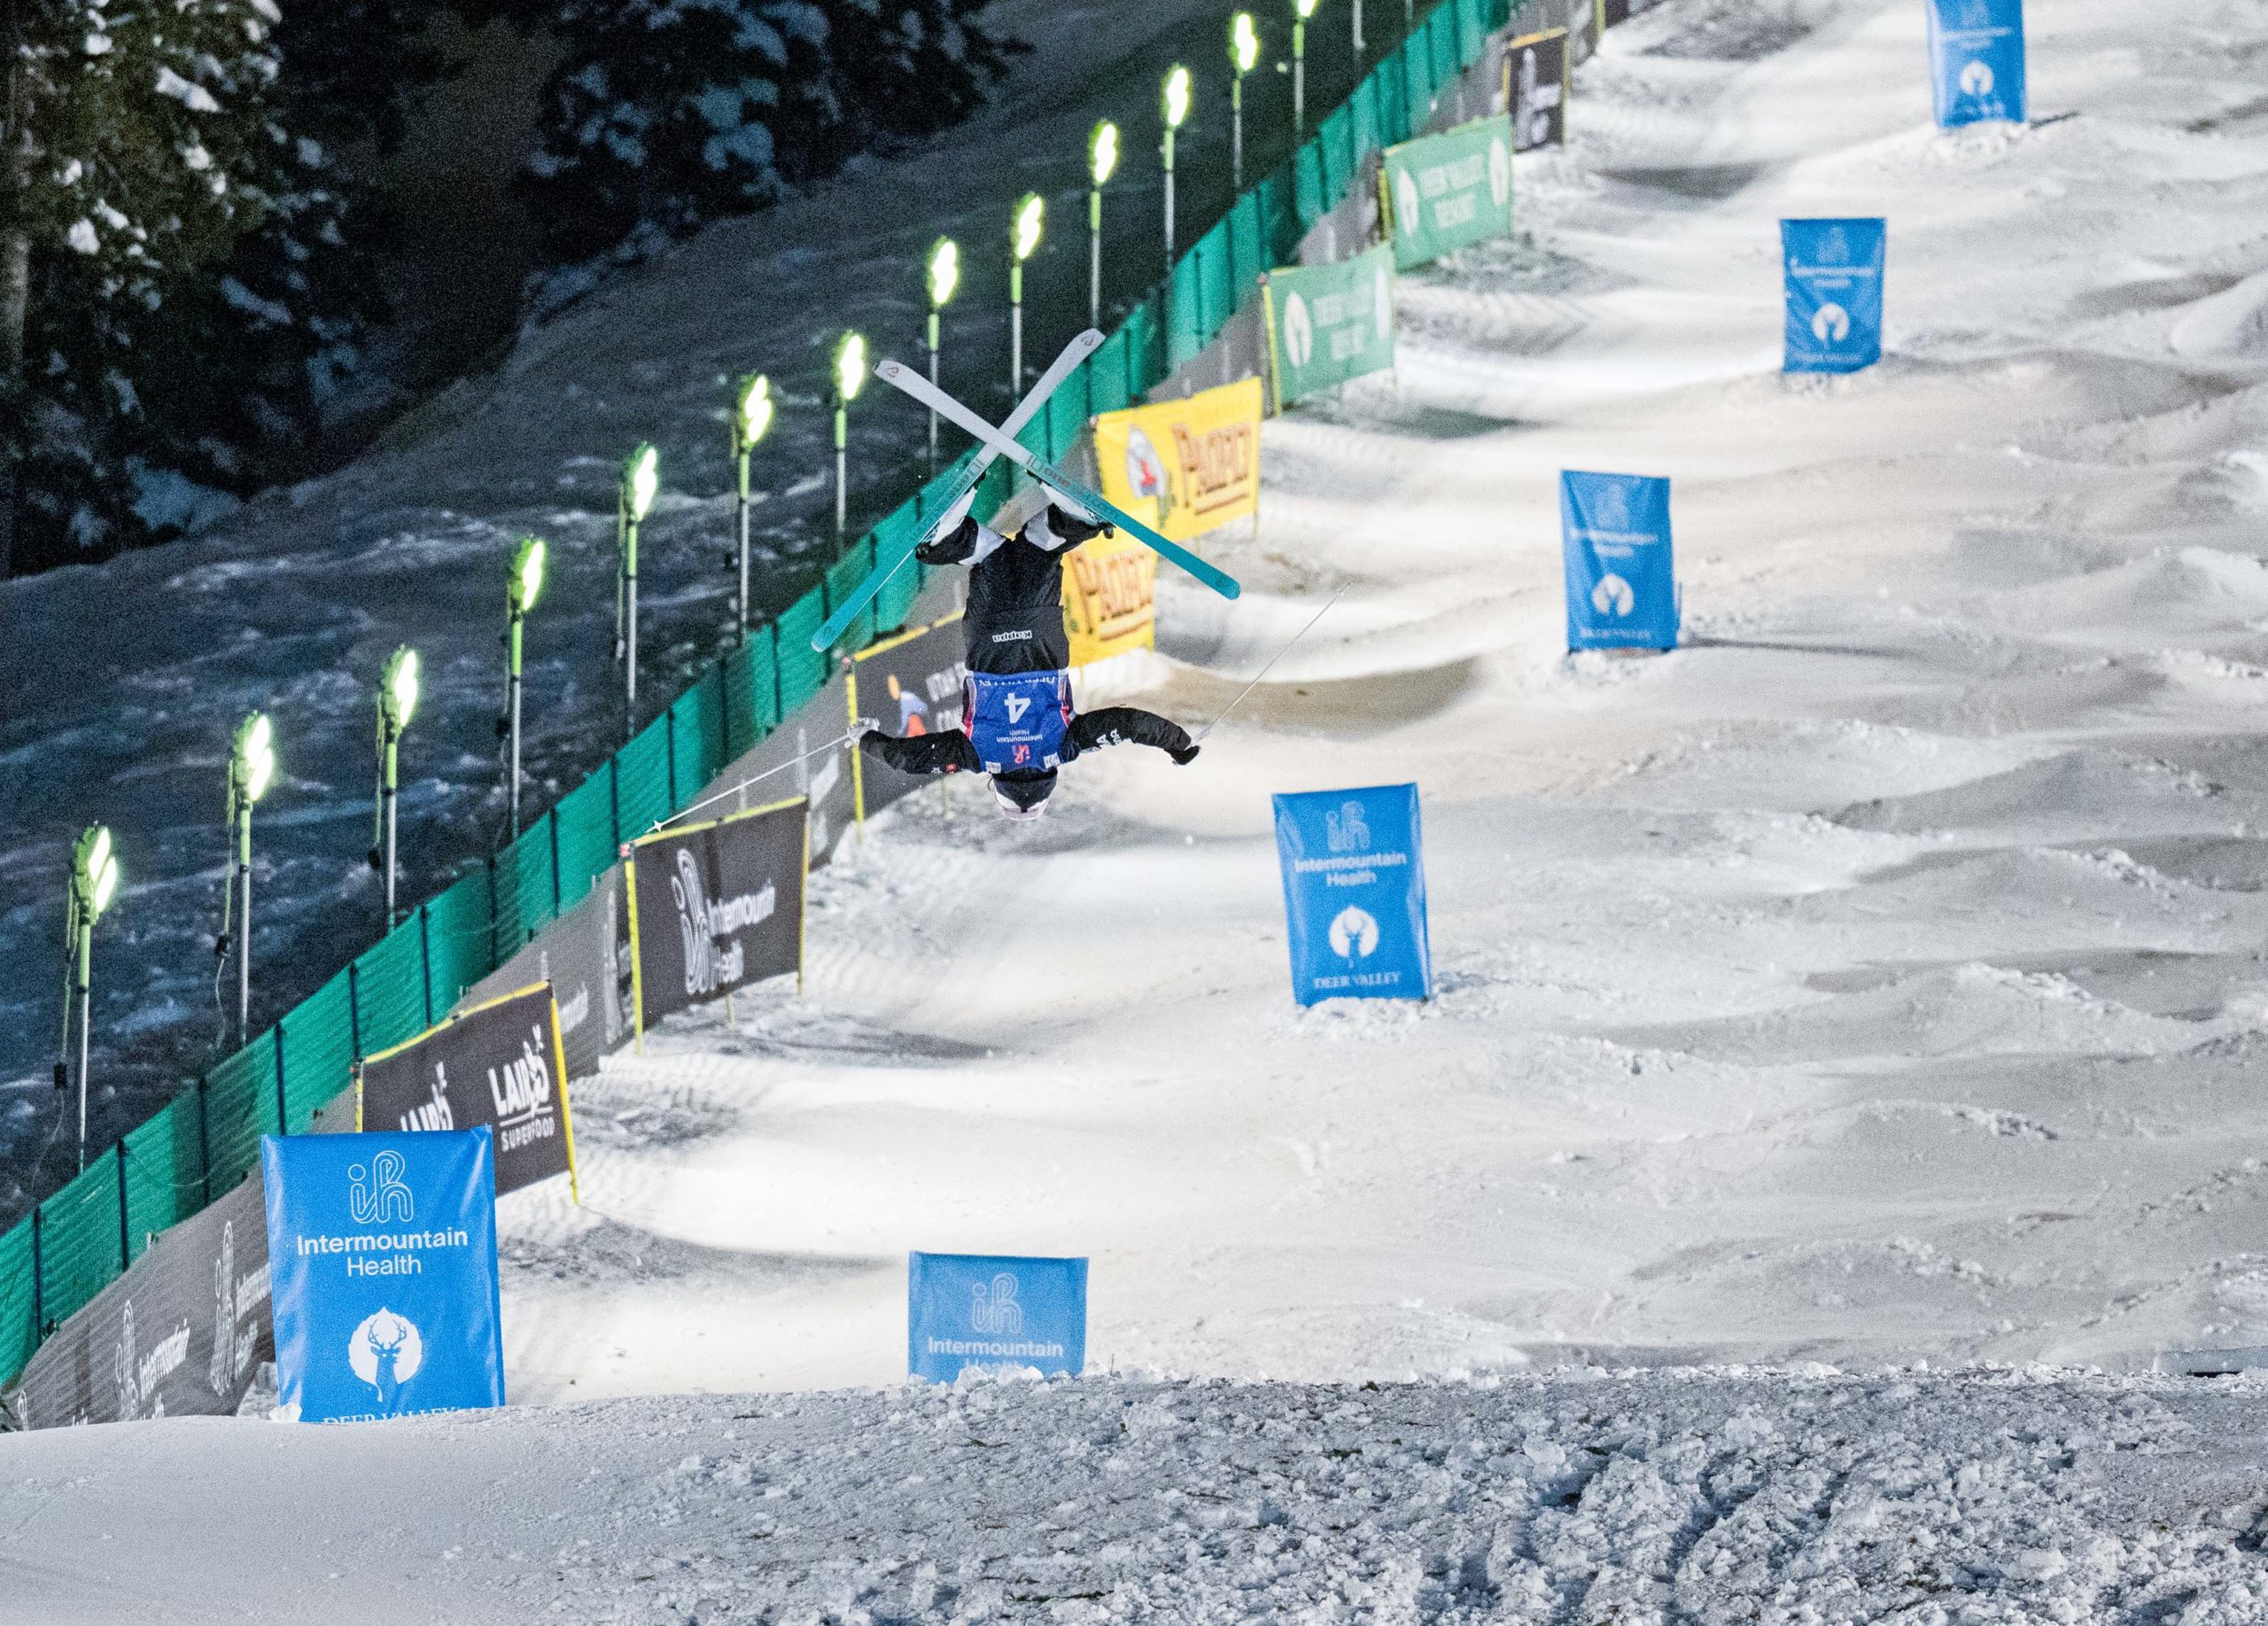 Local skier Jaelin Kauf in her mogul run during the finals.